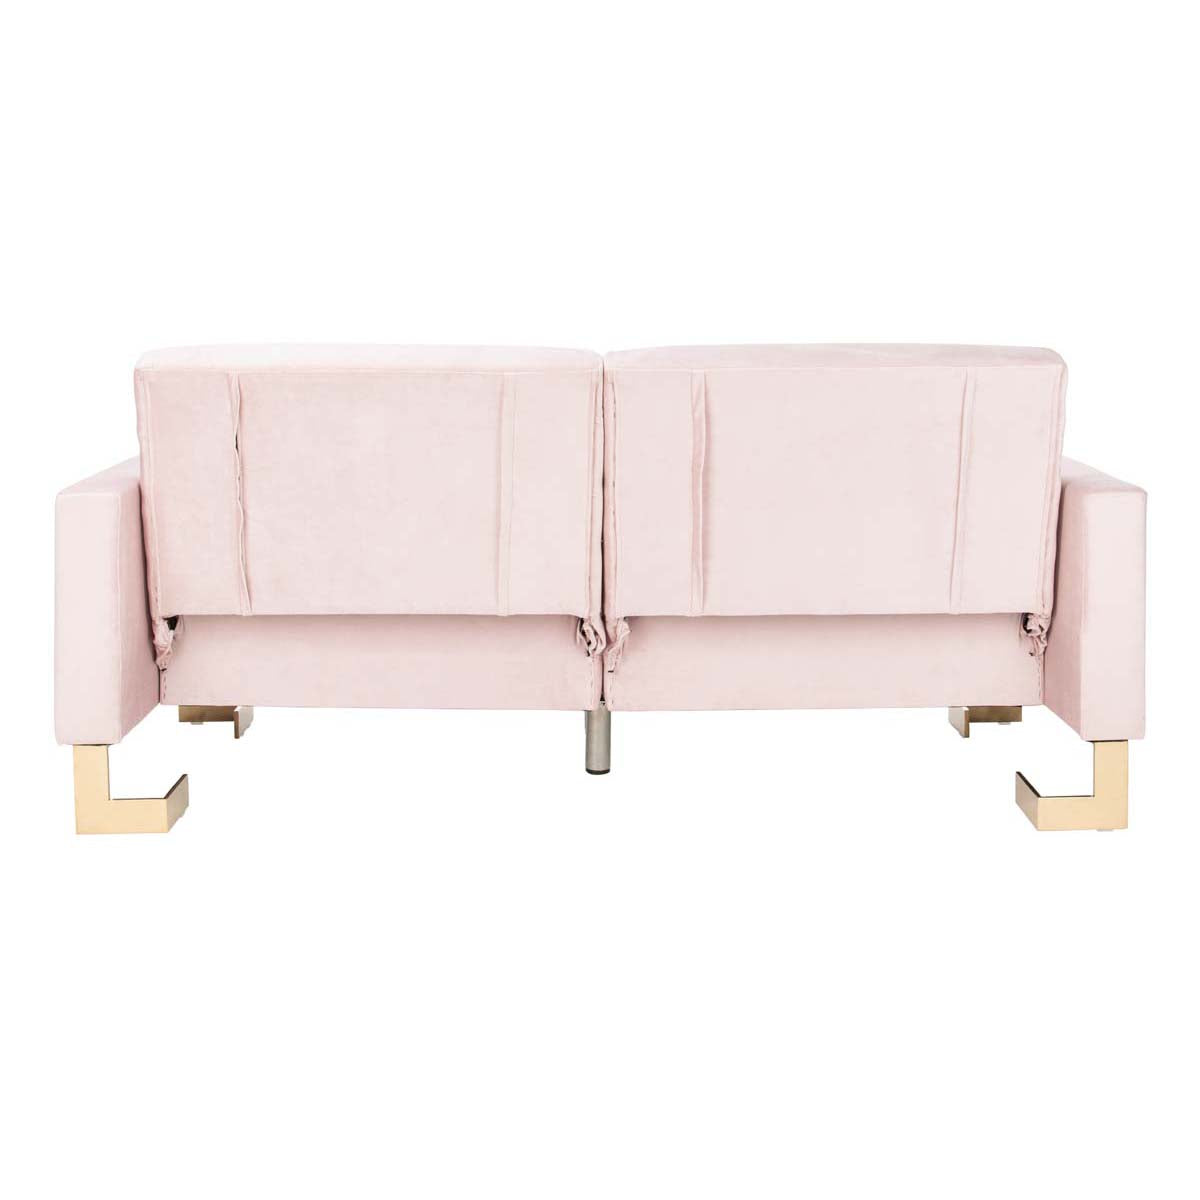 Safavieh Tribeca Foldable Sofa Bed , LVS2001 - Blush / Brass